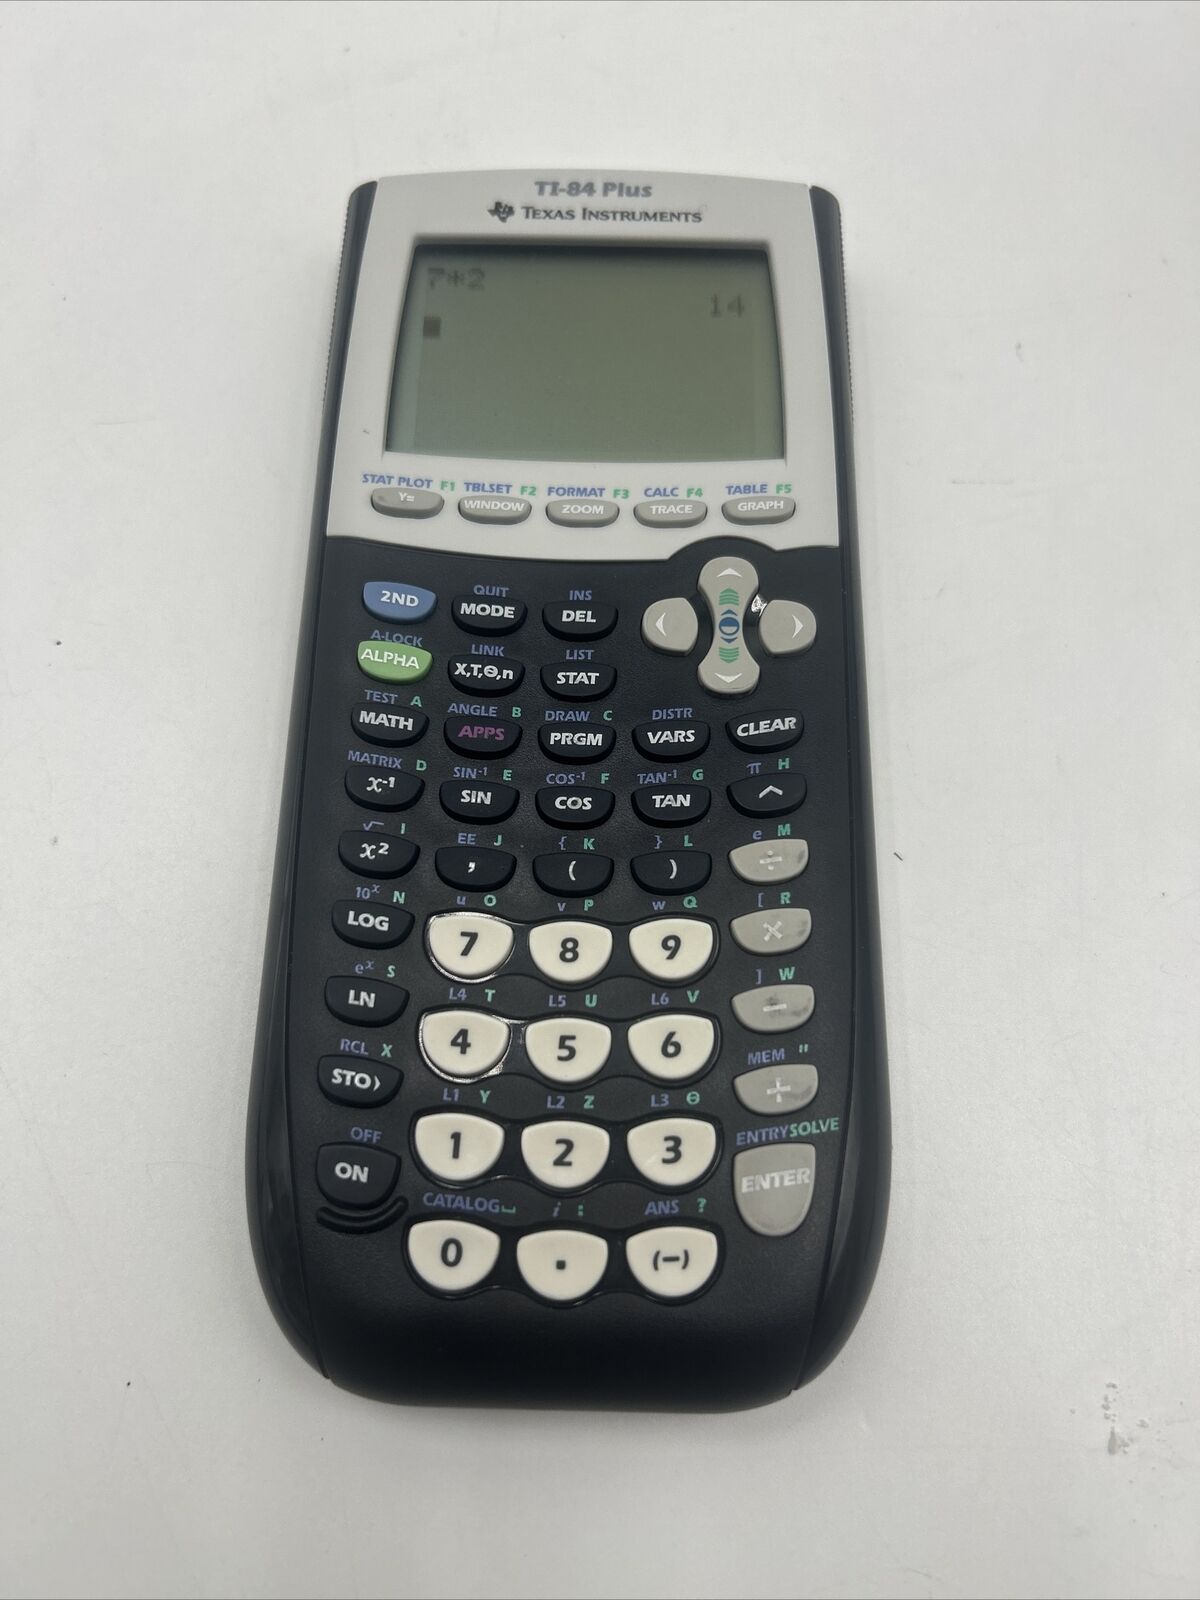 Texas Instruments TI-84 Plus Graphing Calculator - Black